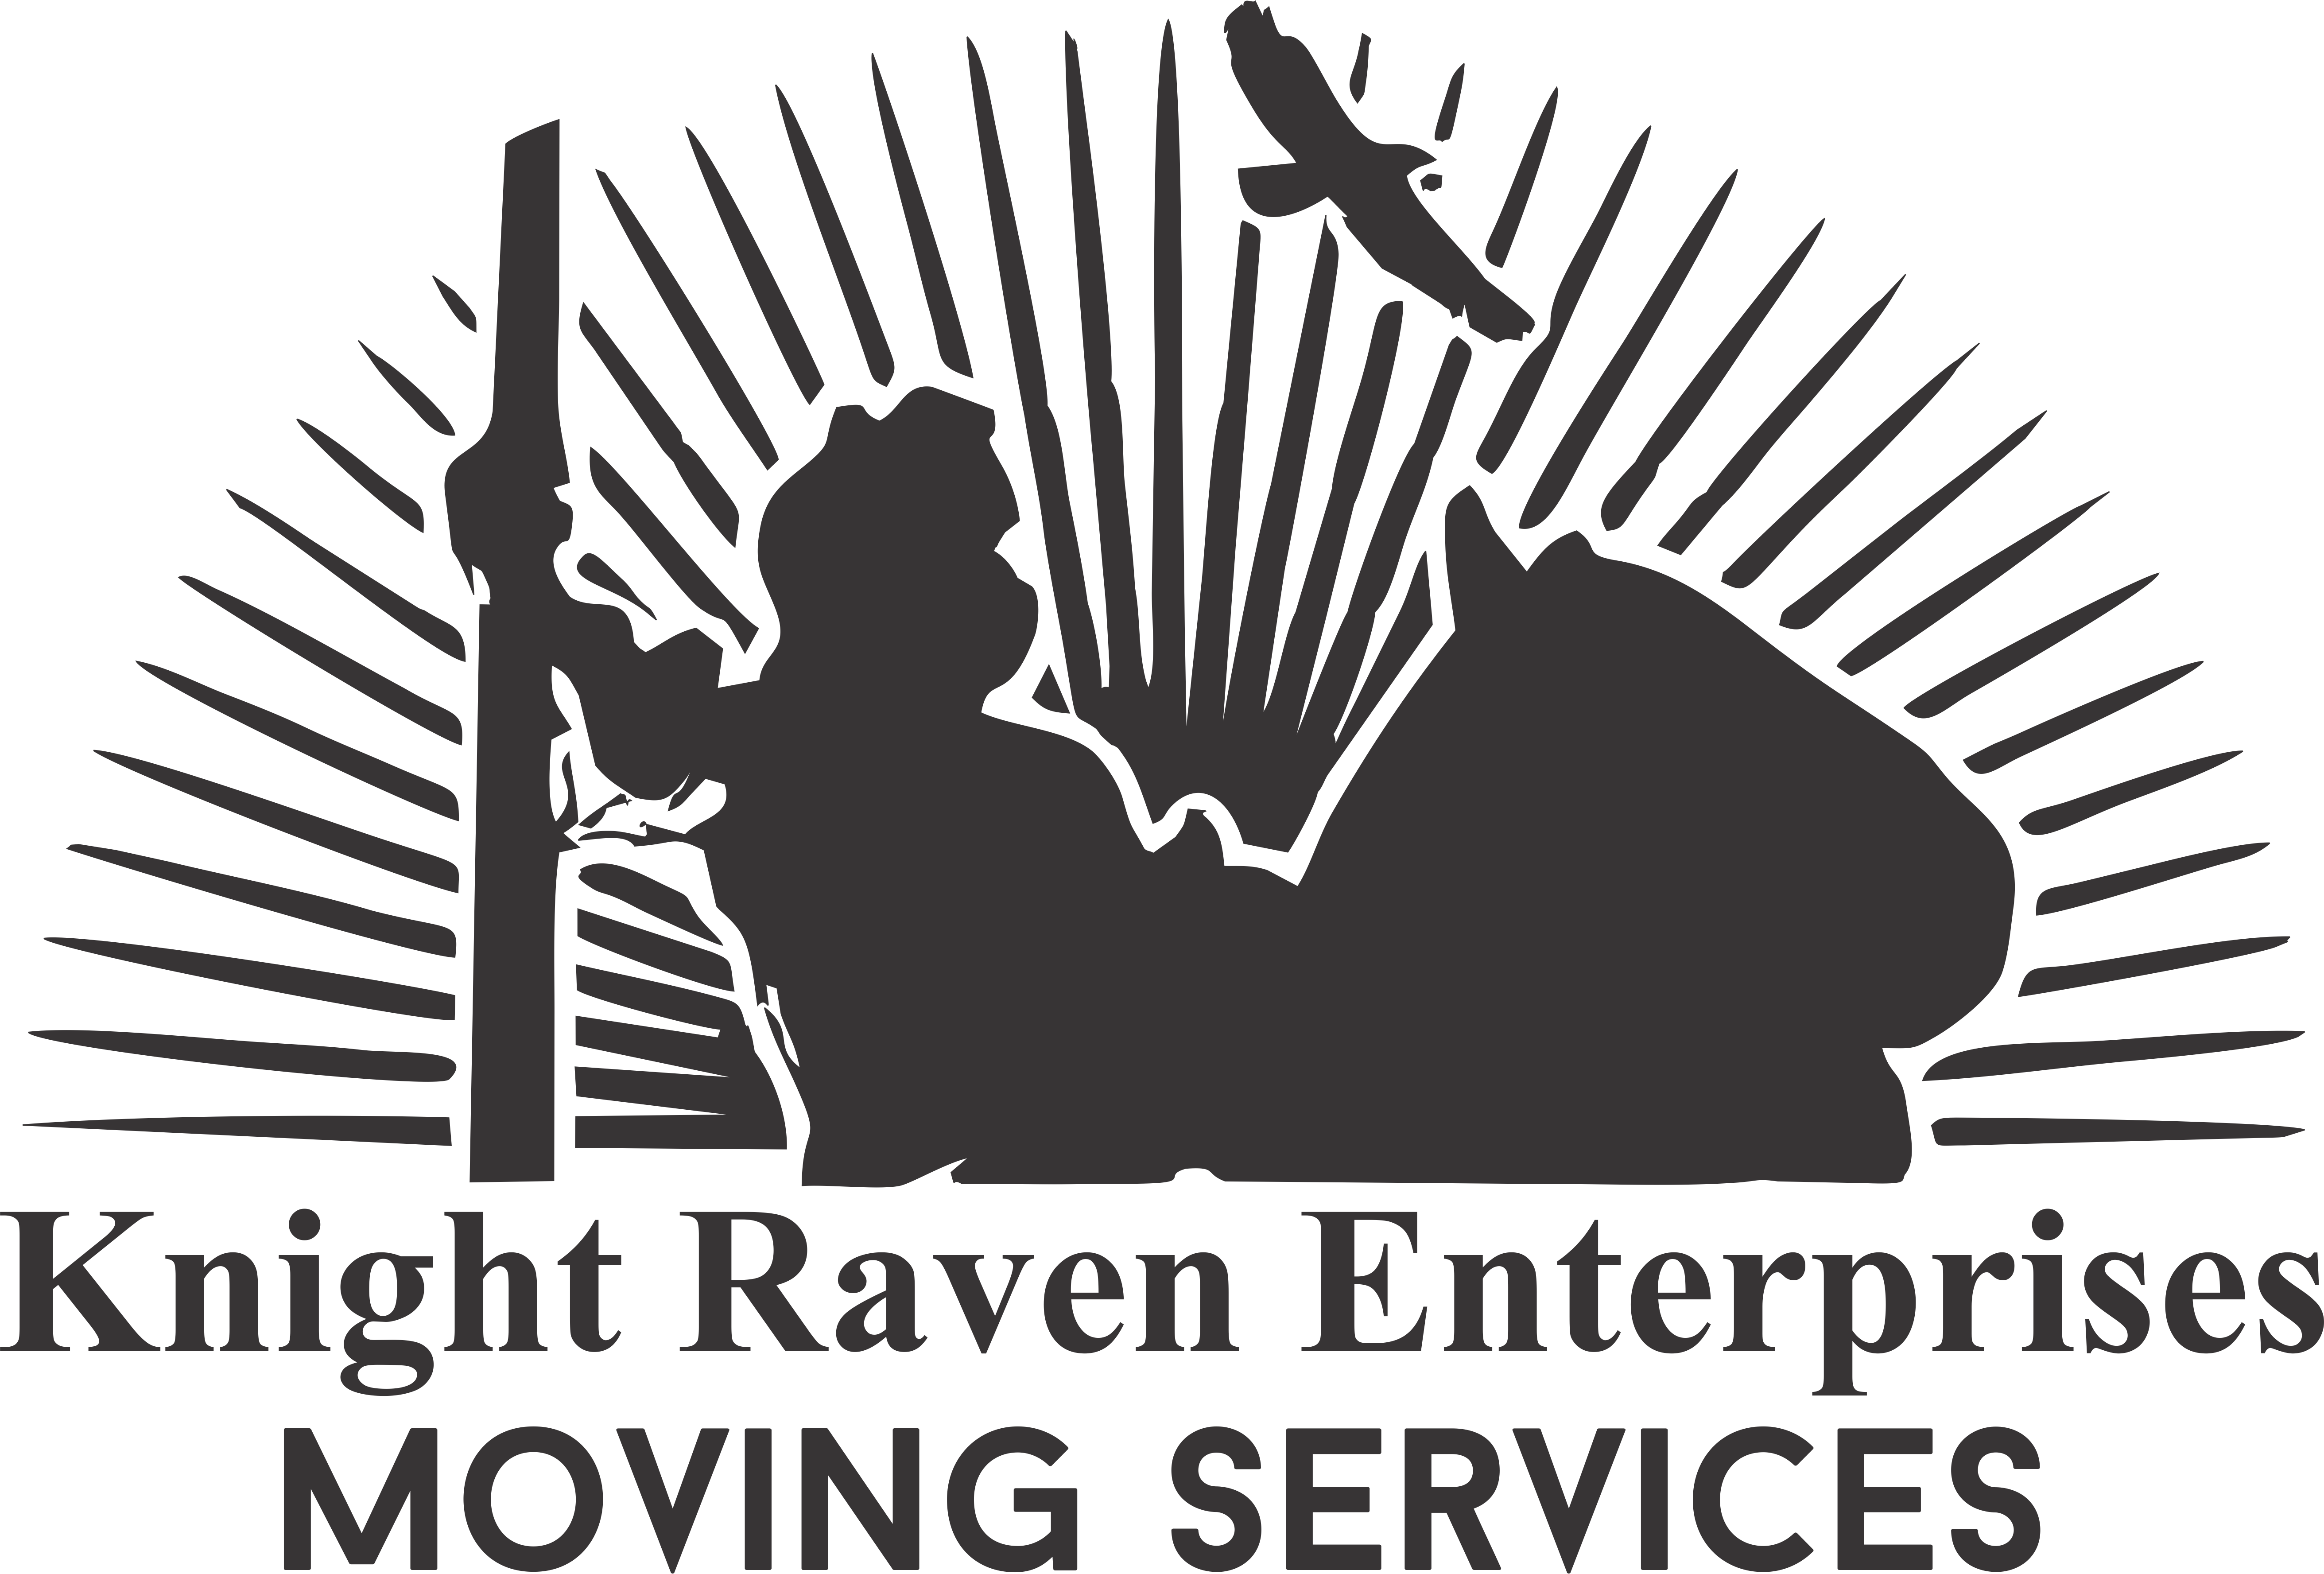 Knight Raven Enterprises